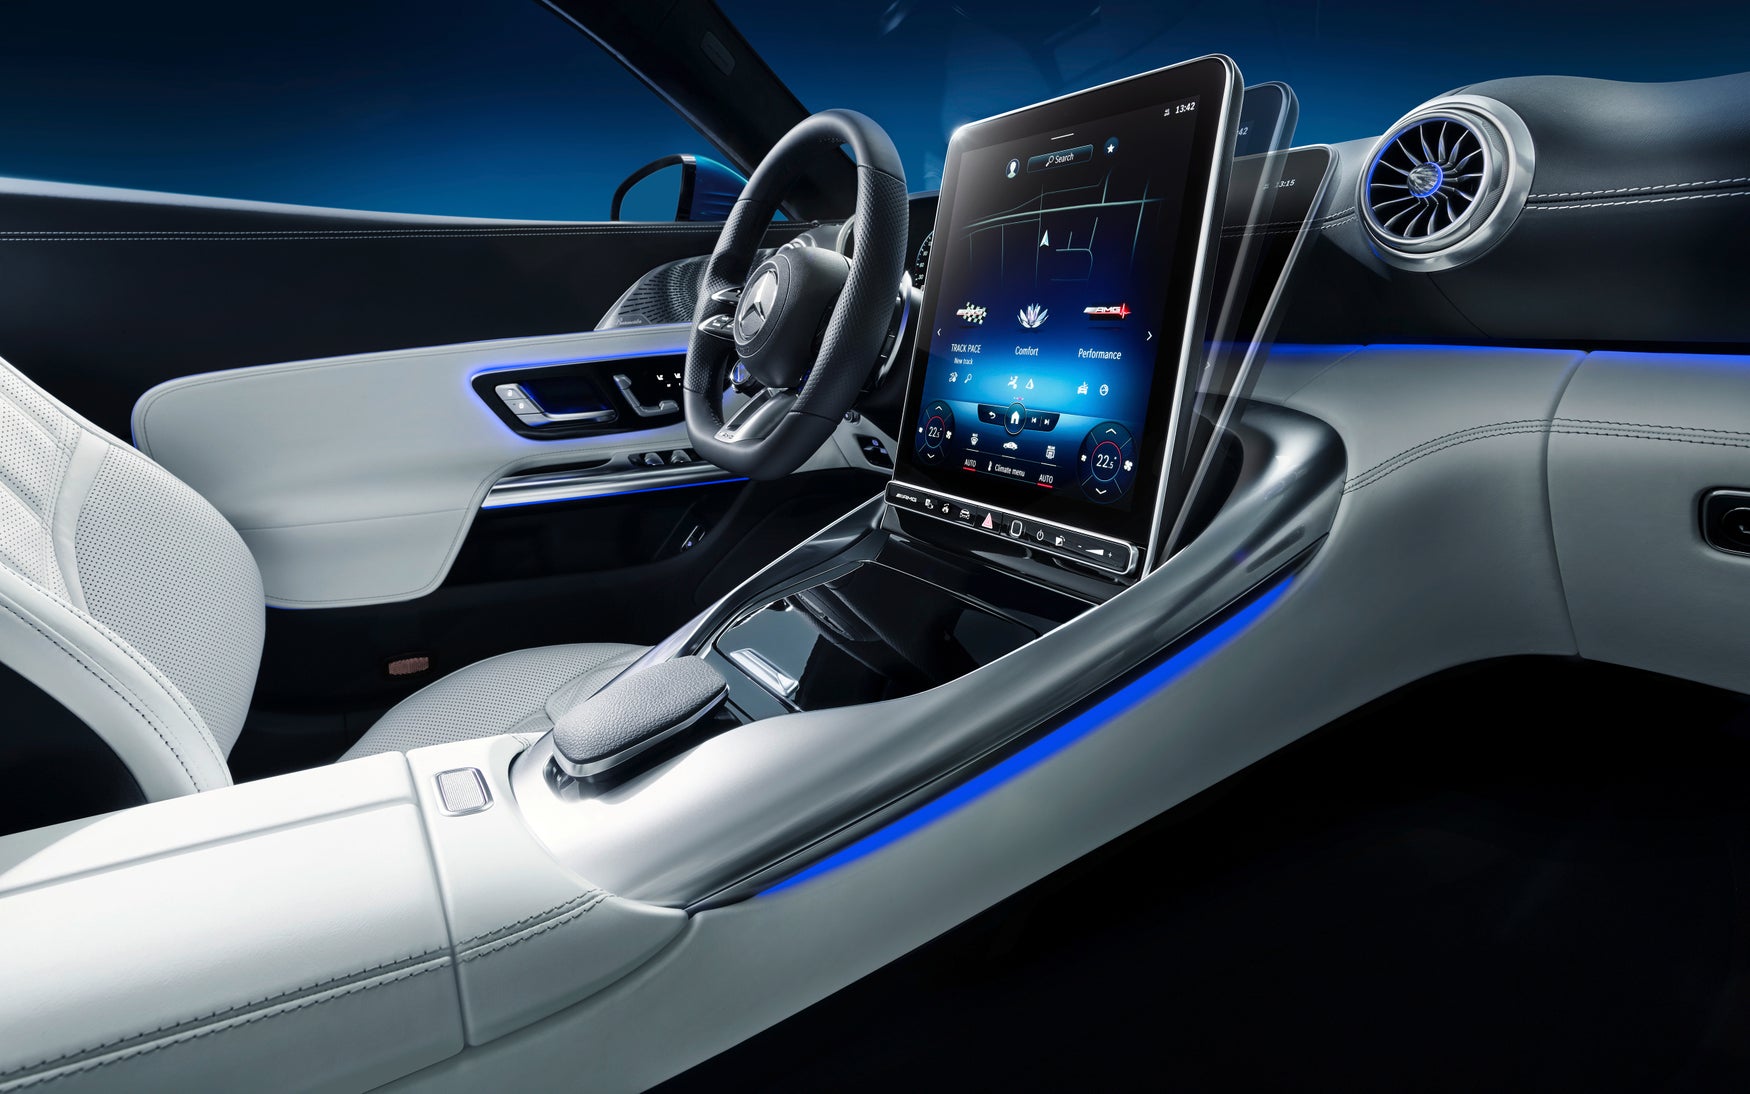 2022 Mercedes SL dash and infotainment screen